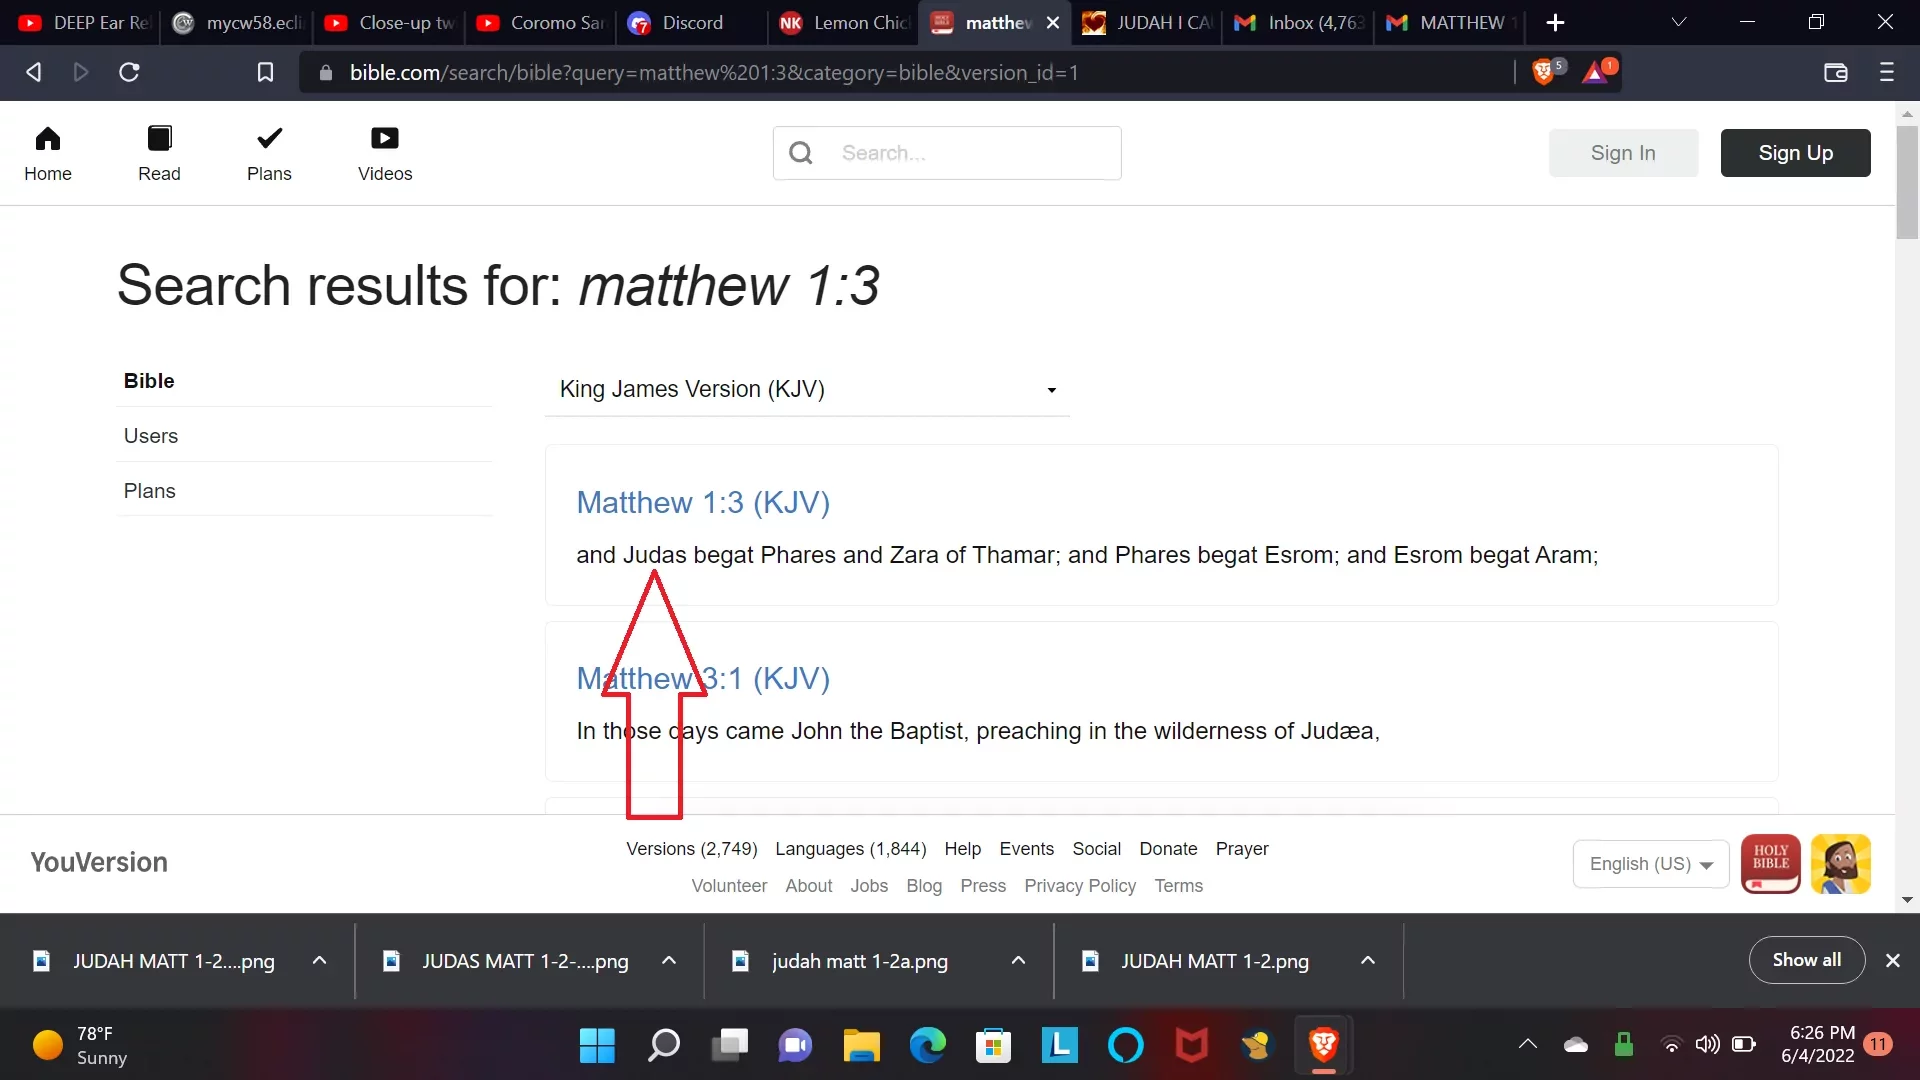 Matthew 1:3 now says JUDAS on Bible.com in 2022